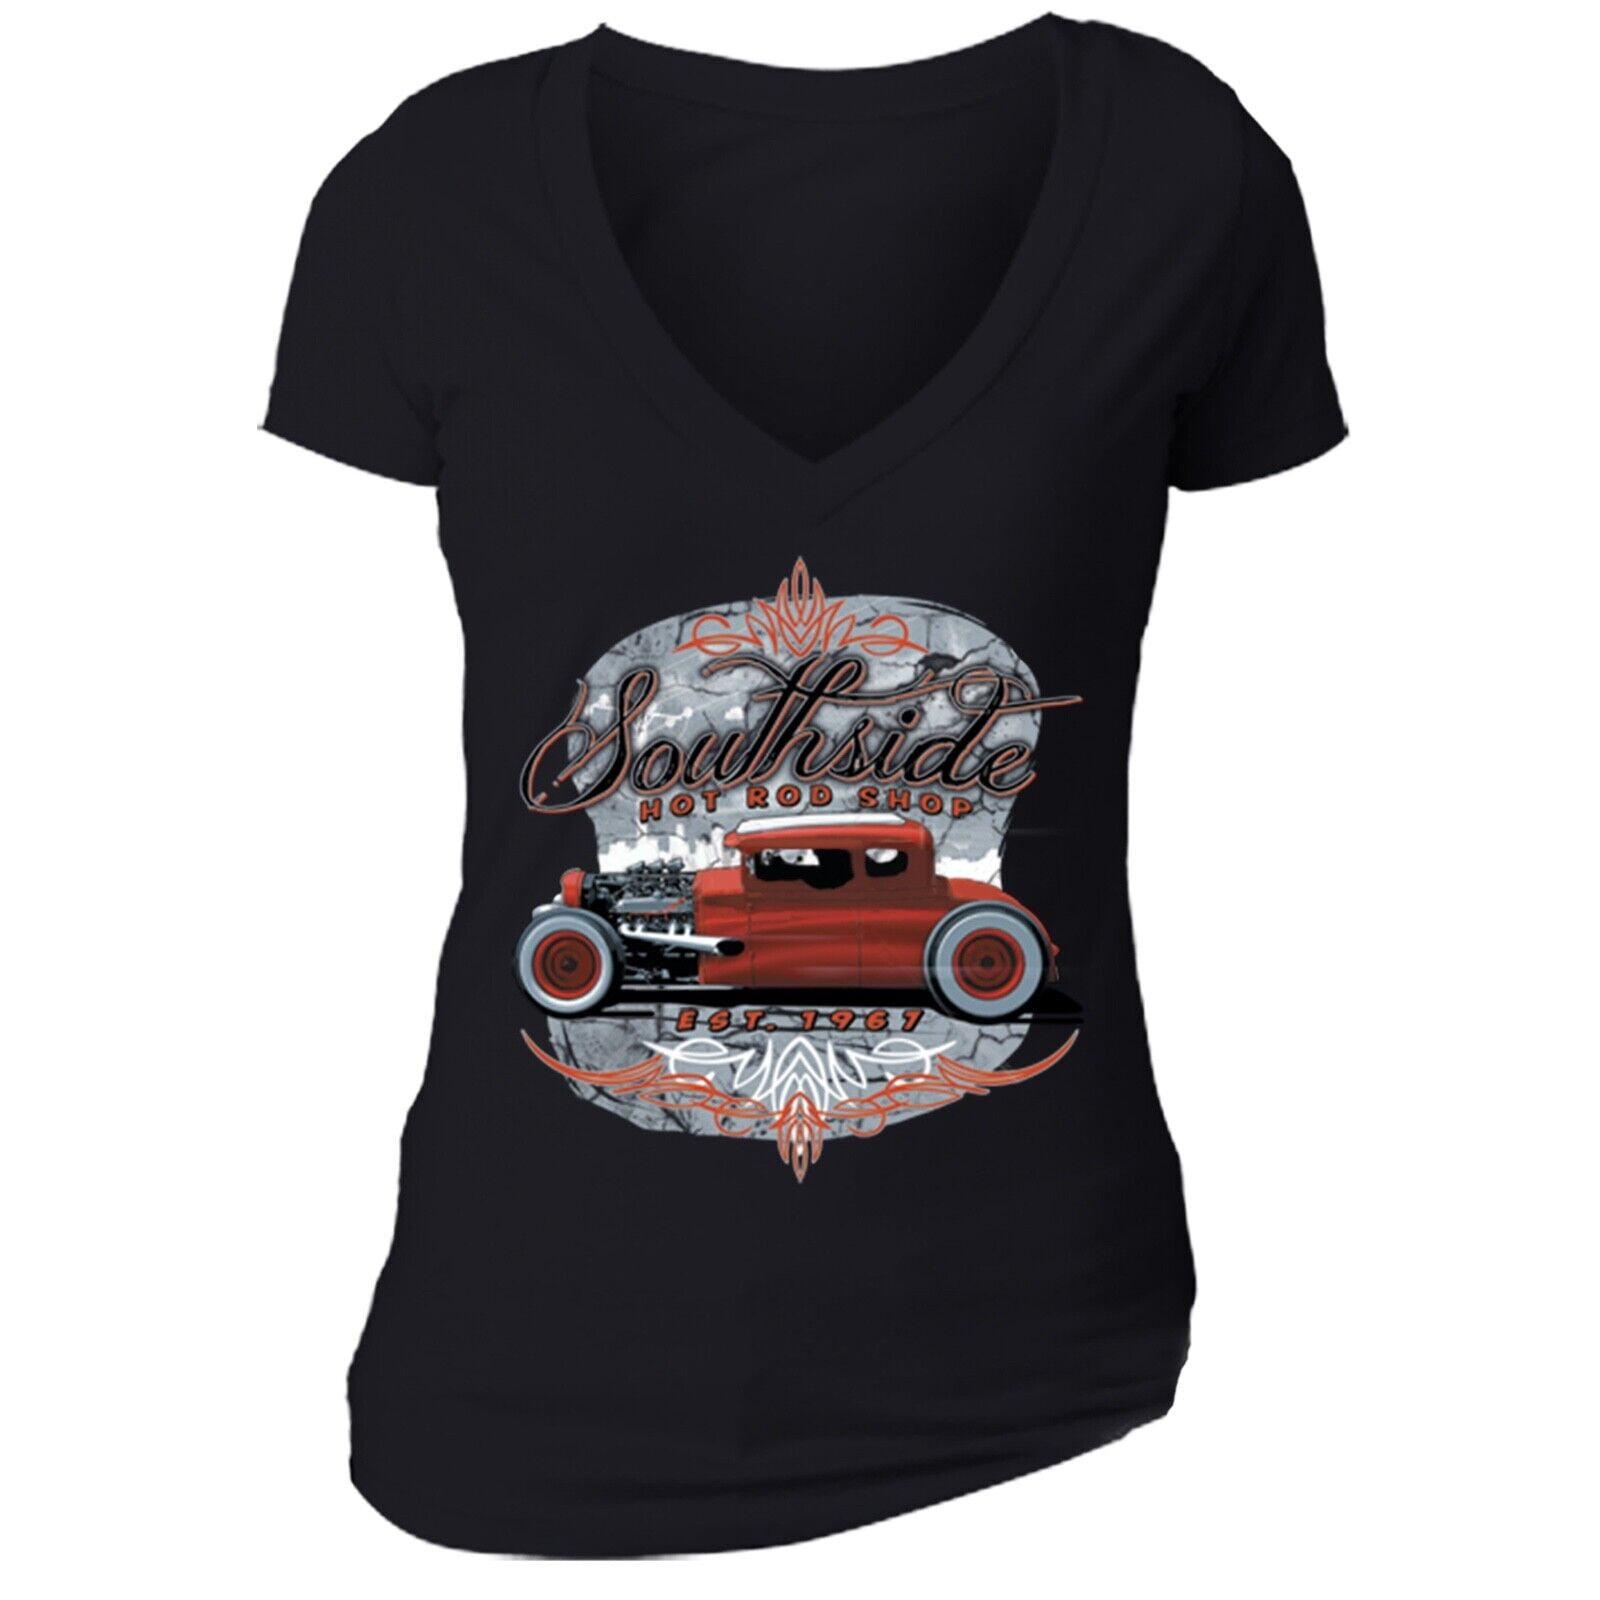 XtraFly Apparel Women's South Side Hot Rod Shop T-shirt Classic Car Garage  Engine Motorcycle Motor Tee